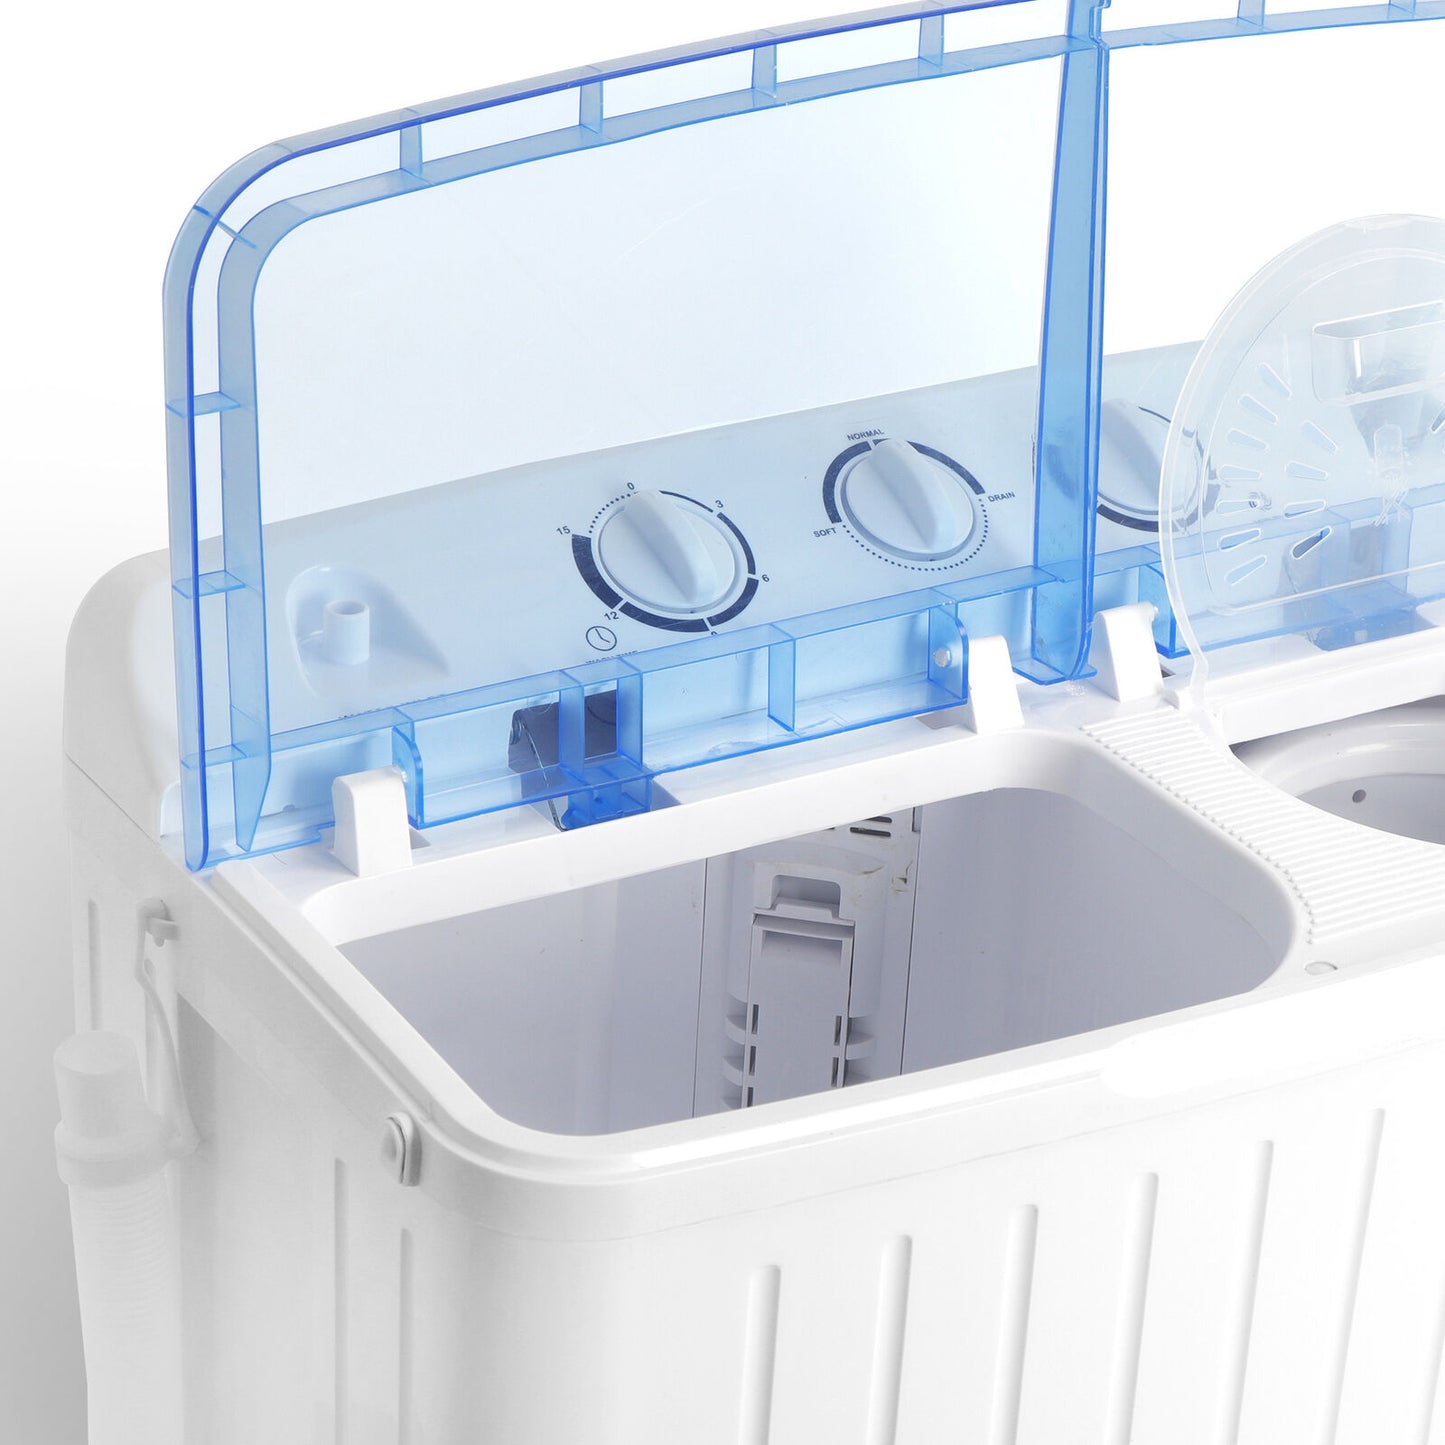 Mini Compact Twin Tub Portable Washing Machine 17.6lbs Washer w/ Wash and Spin